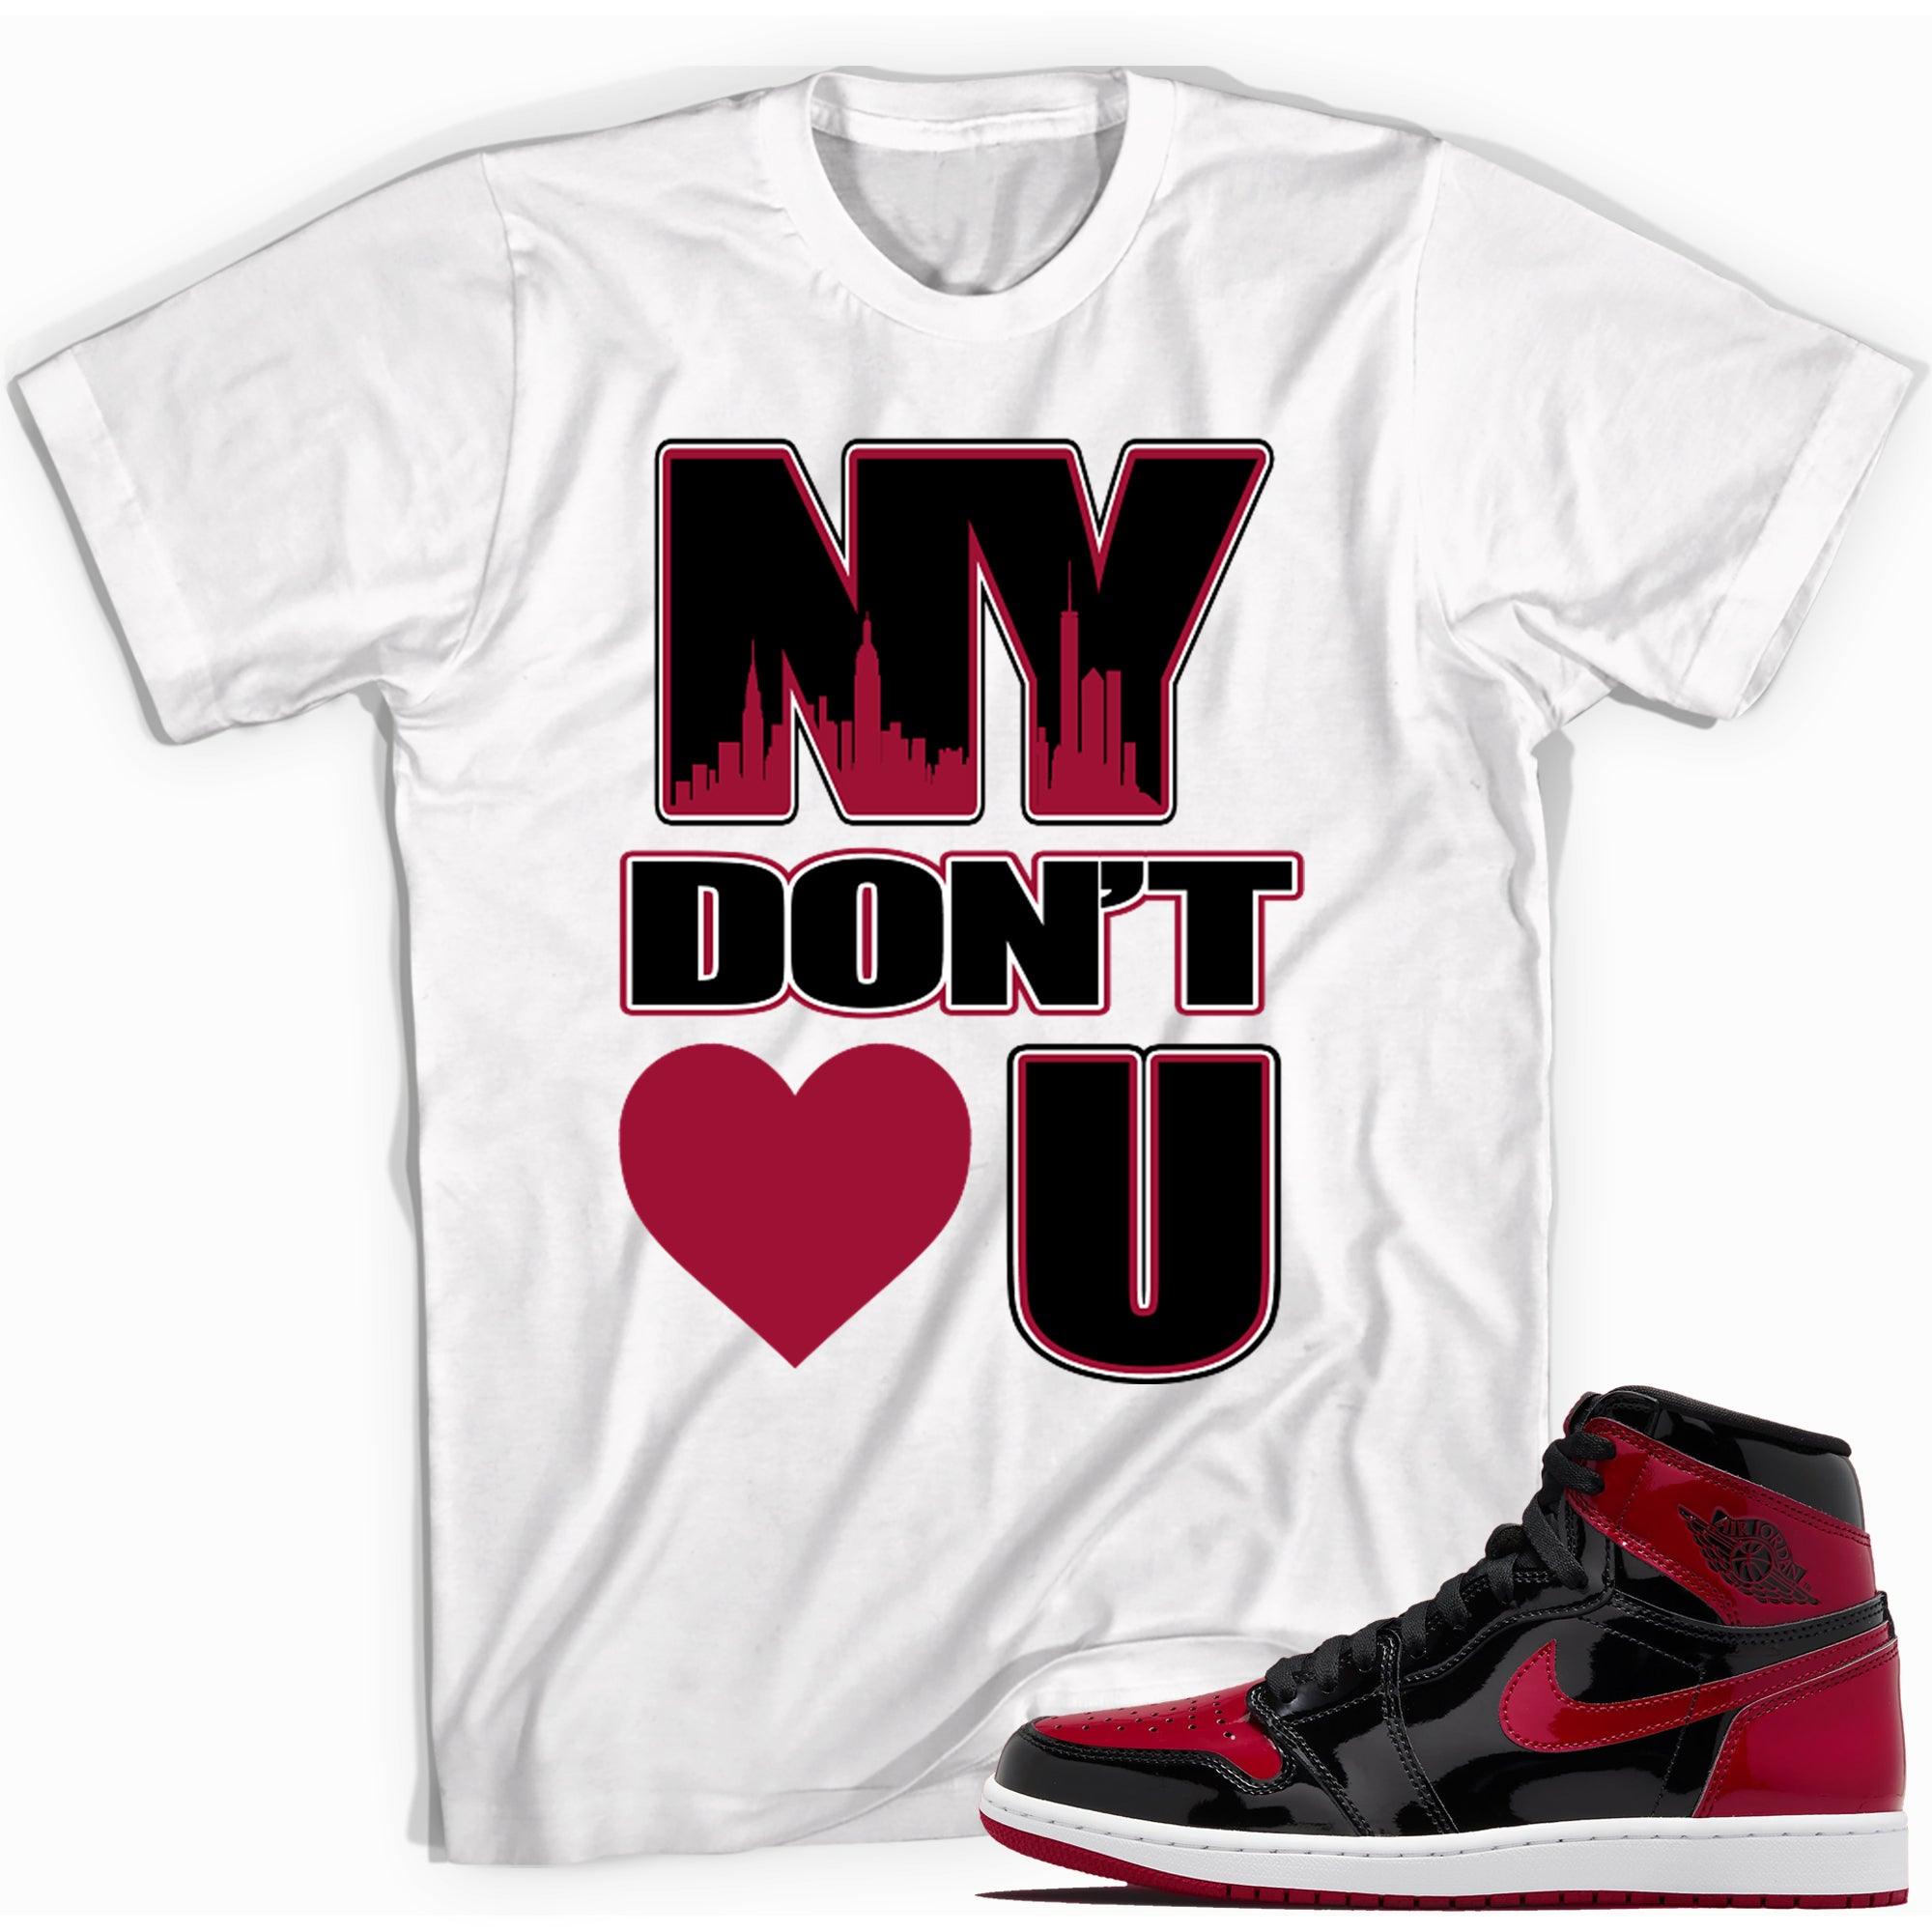 NY Don't Love You Shirt Jordan 1 Patent Leather Bred photo